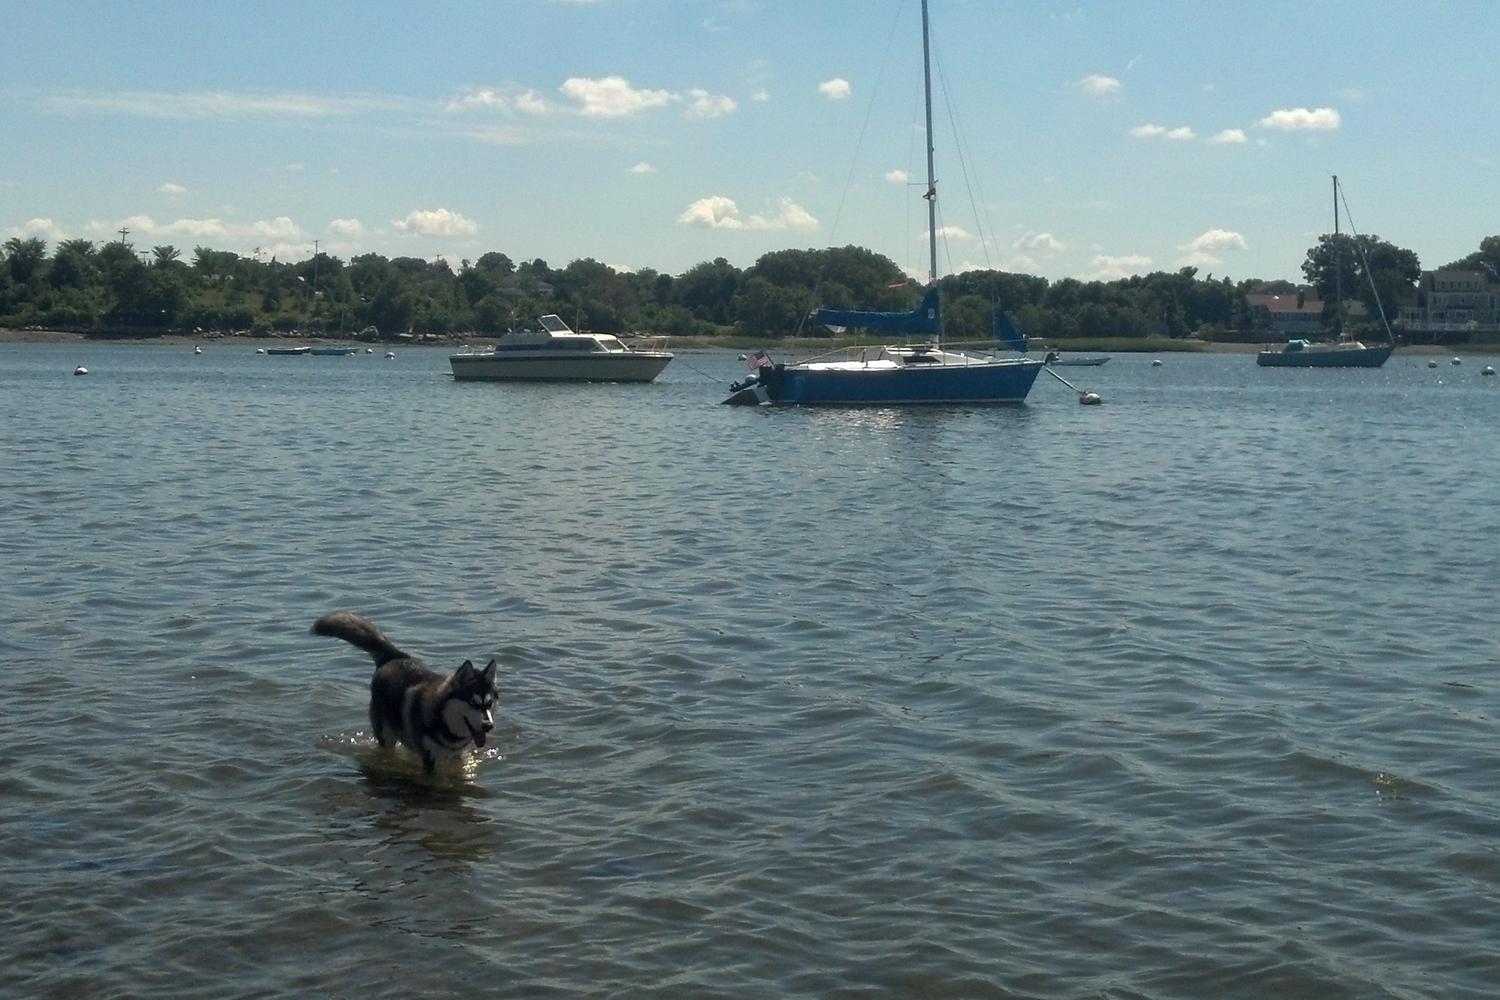 Stodder's Neck Dog Park review in Weymouth, Massachusetts | MyPetMaps